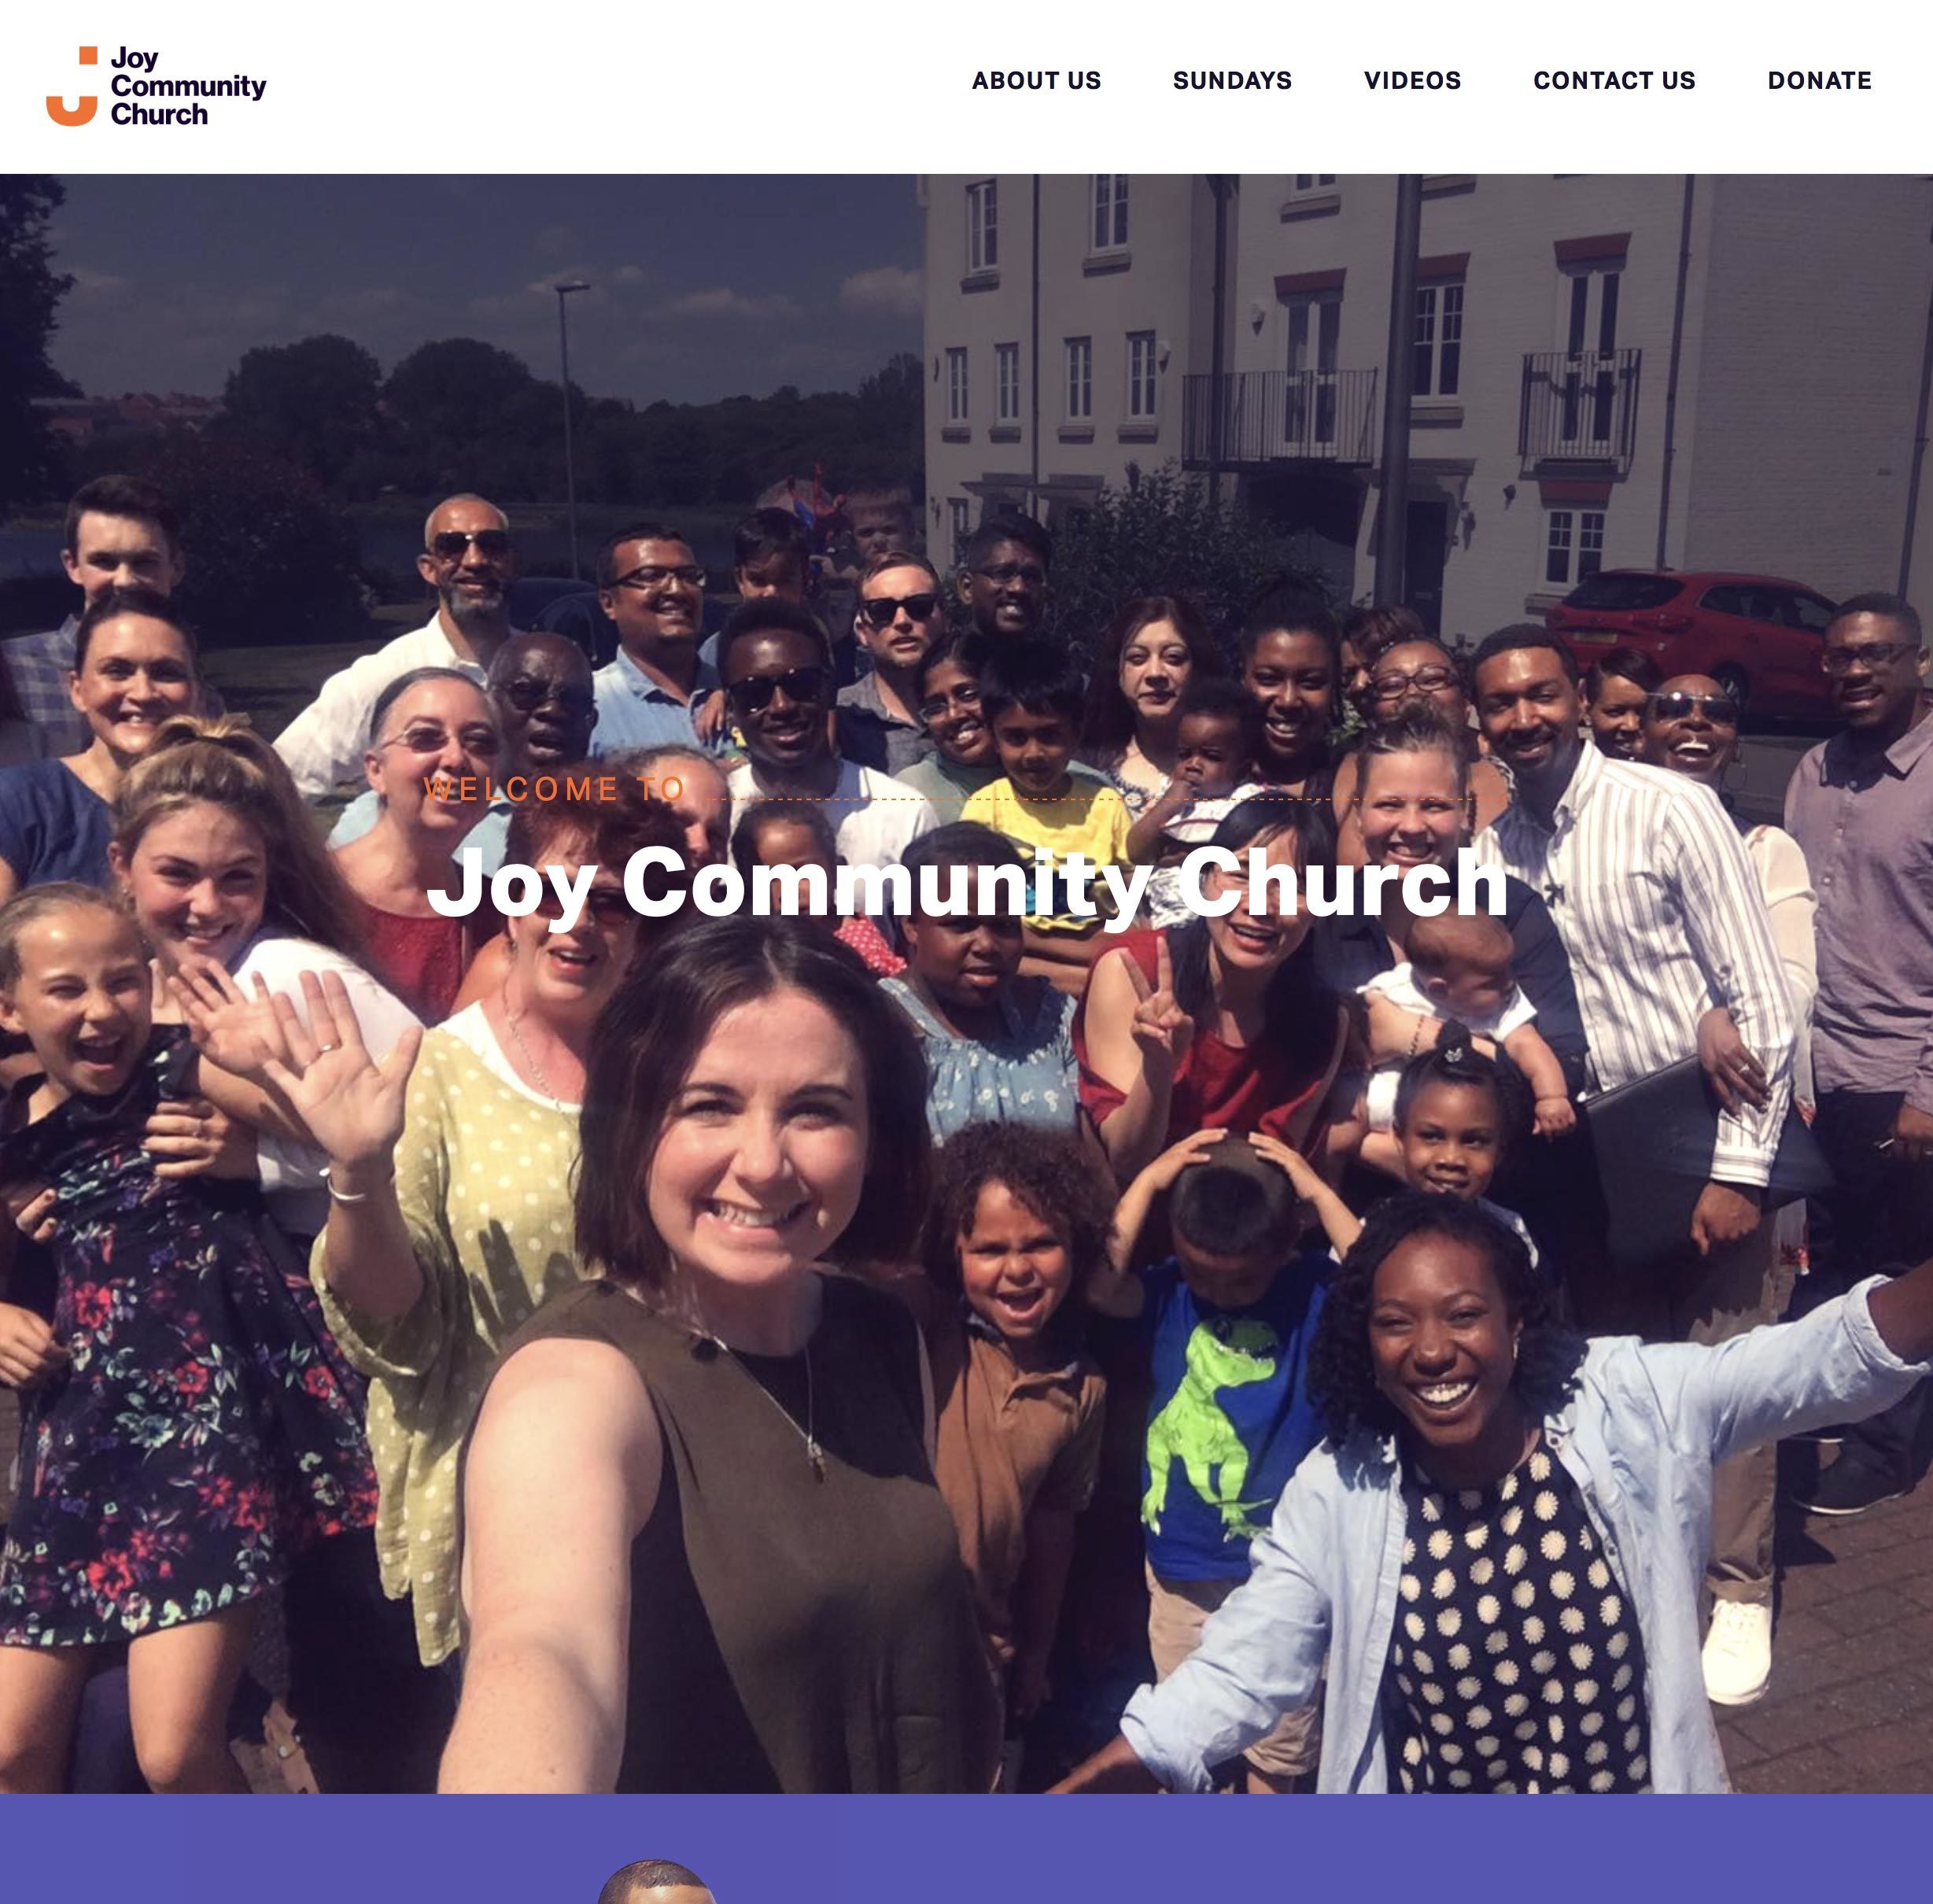 joy-community-church-large.jpg